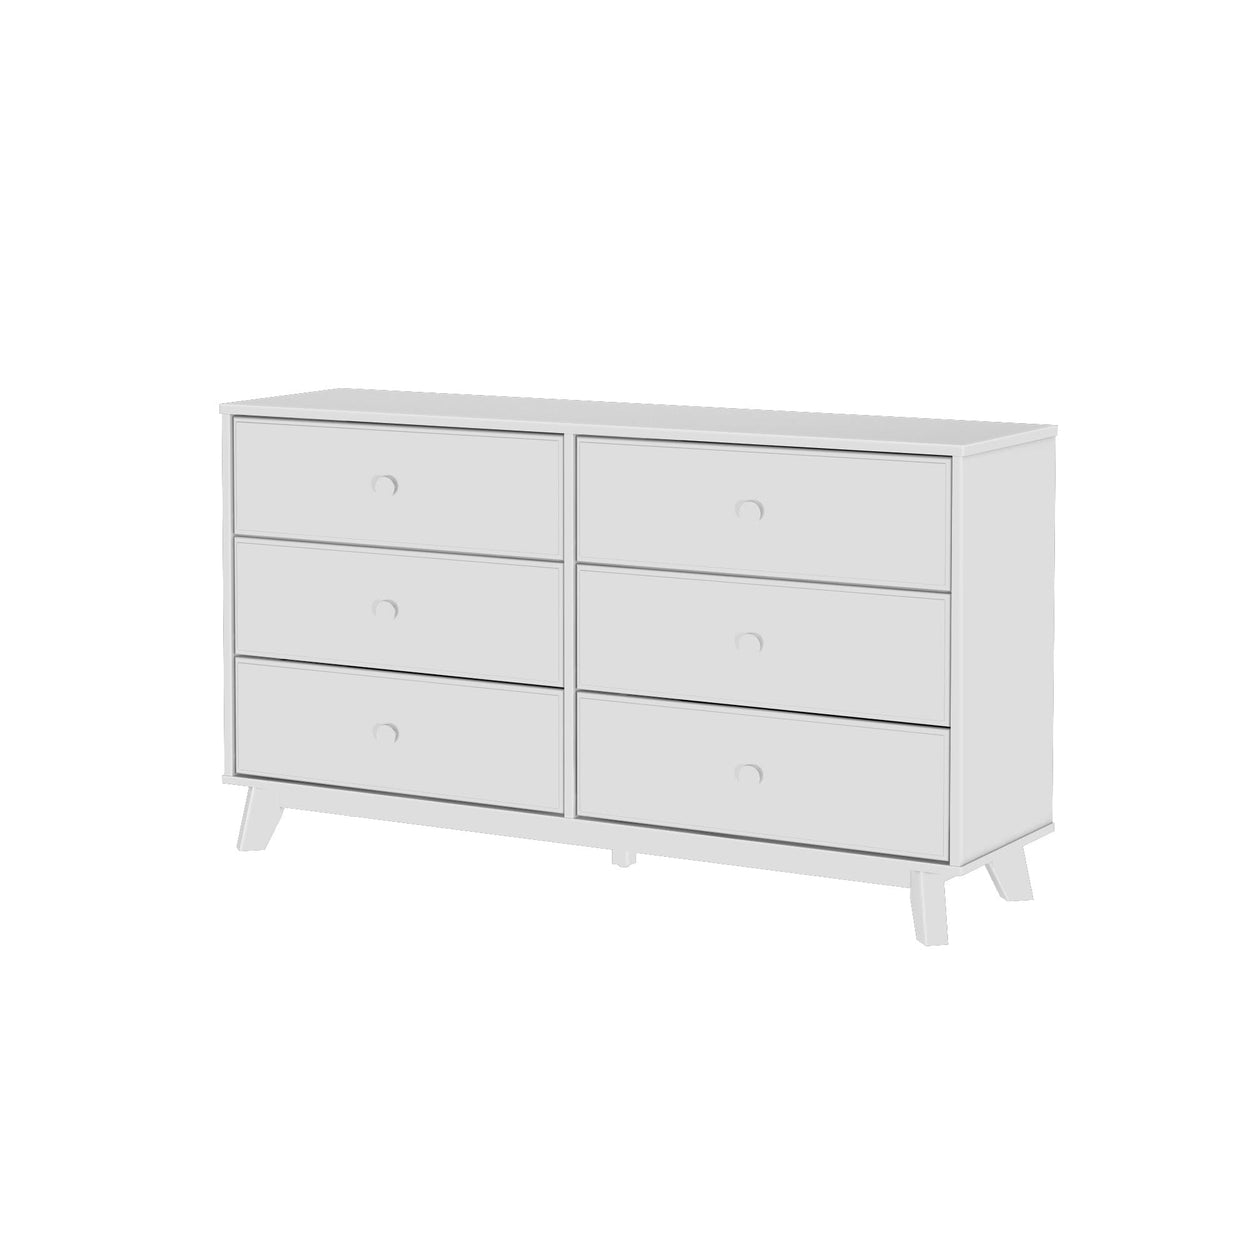 1800216000-002 : Furniture Max & Lily 6 Drawer Dresser, White